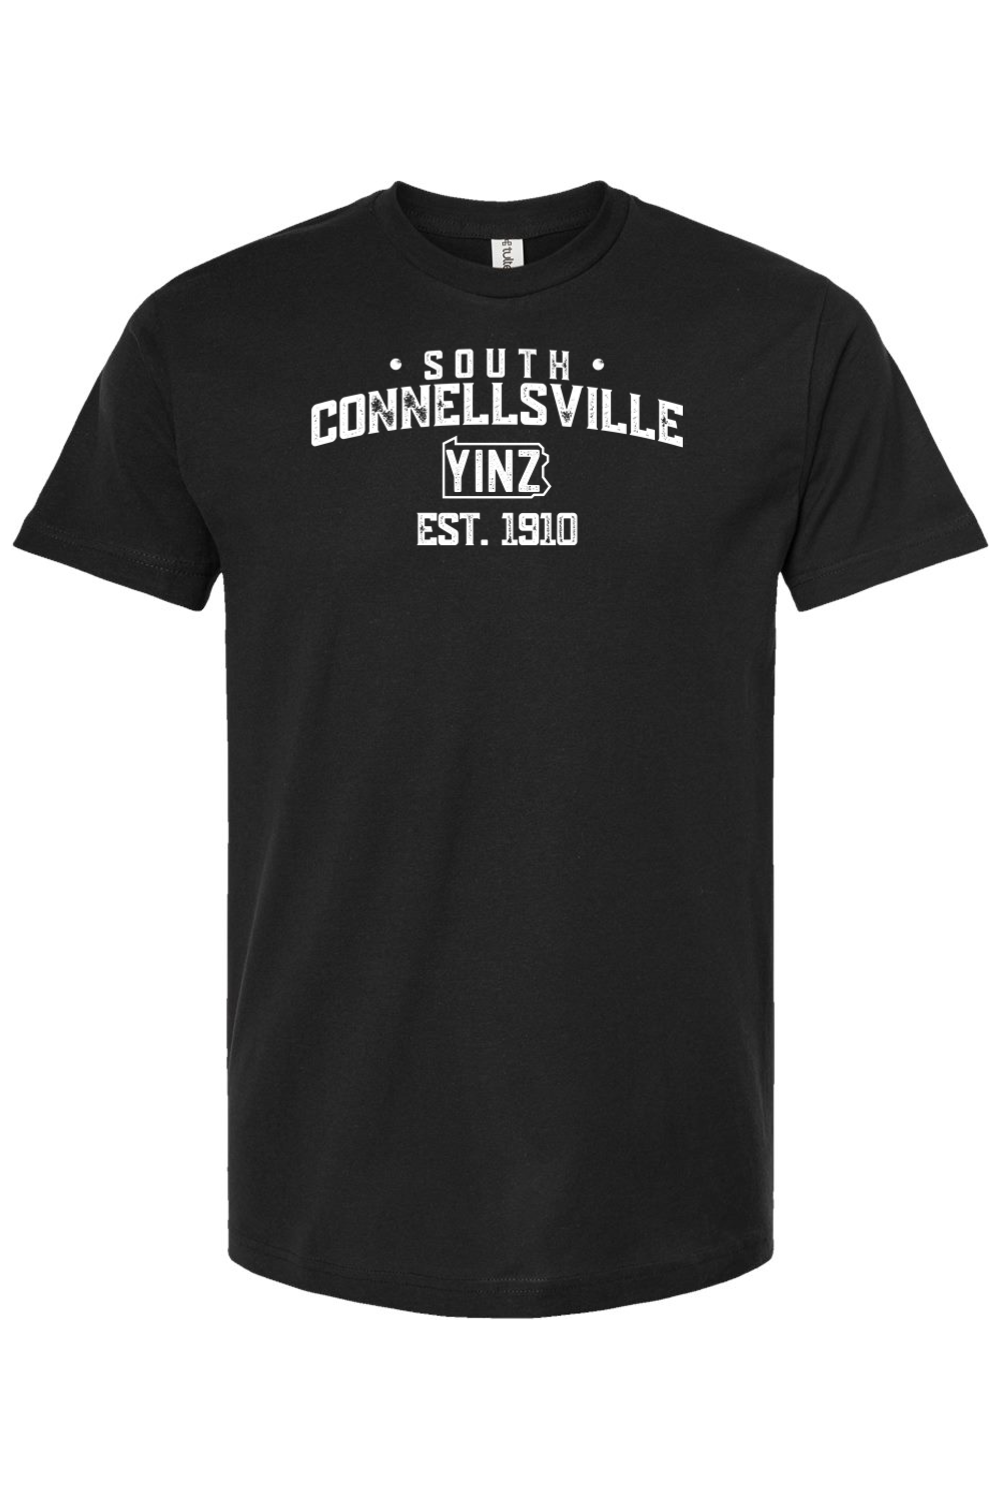 South Connellsville Yinzylvania - Yinzylvania